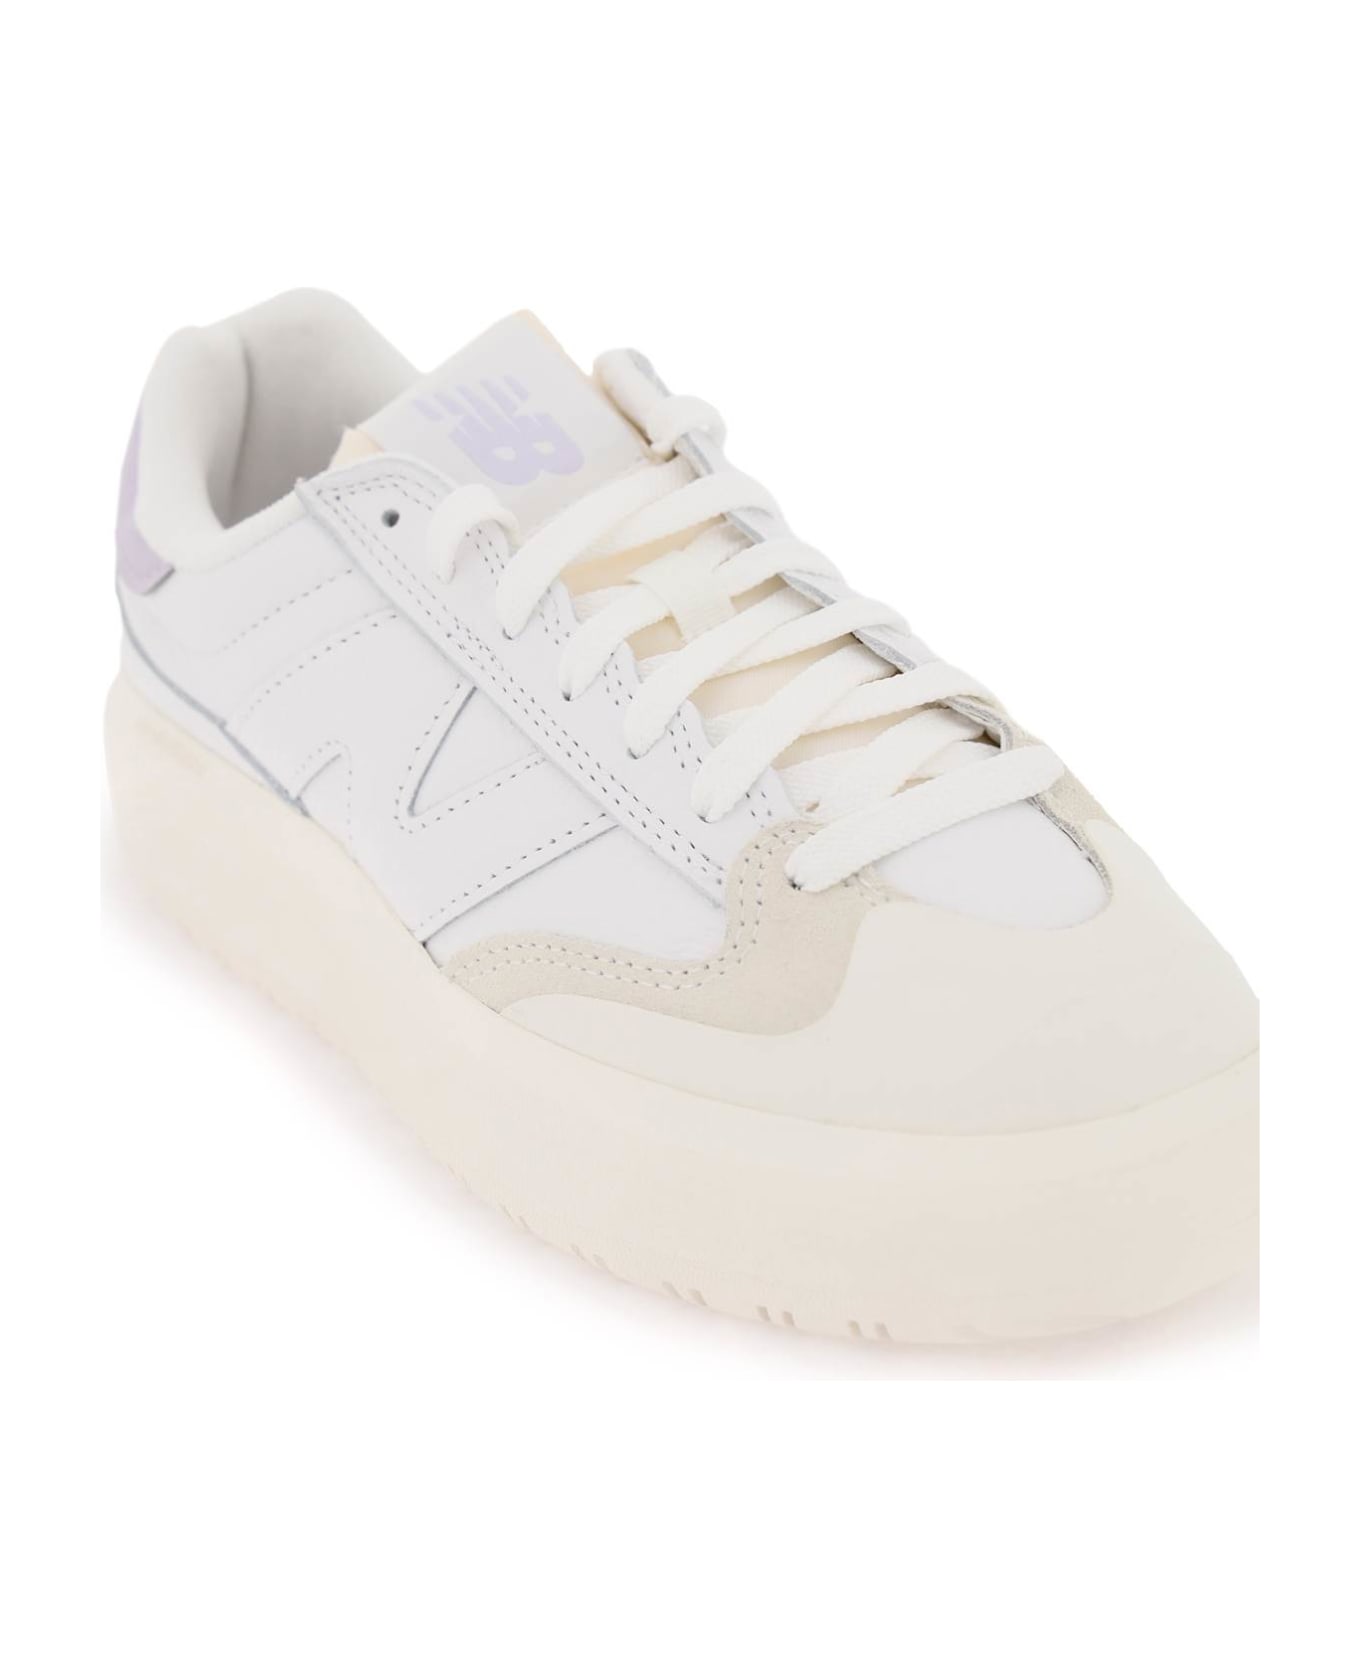 New Balance Ct302 Sneakers - WHITE (White)